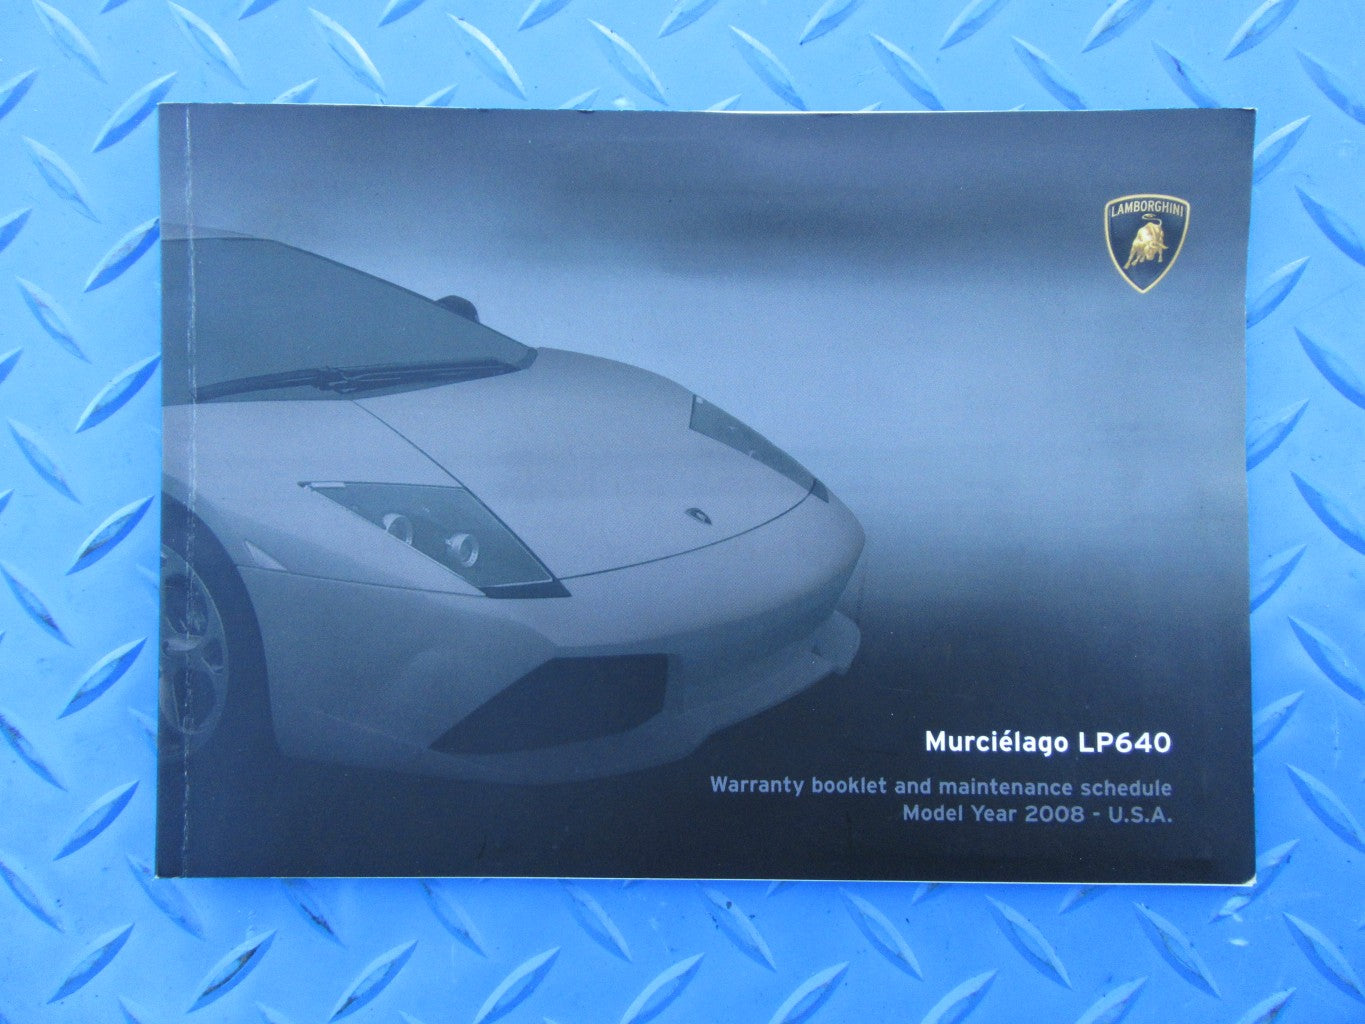 Lamborghini Murcielago LP640 owners handbook roadside maintenance manuals with pouch #2600